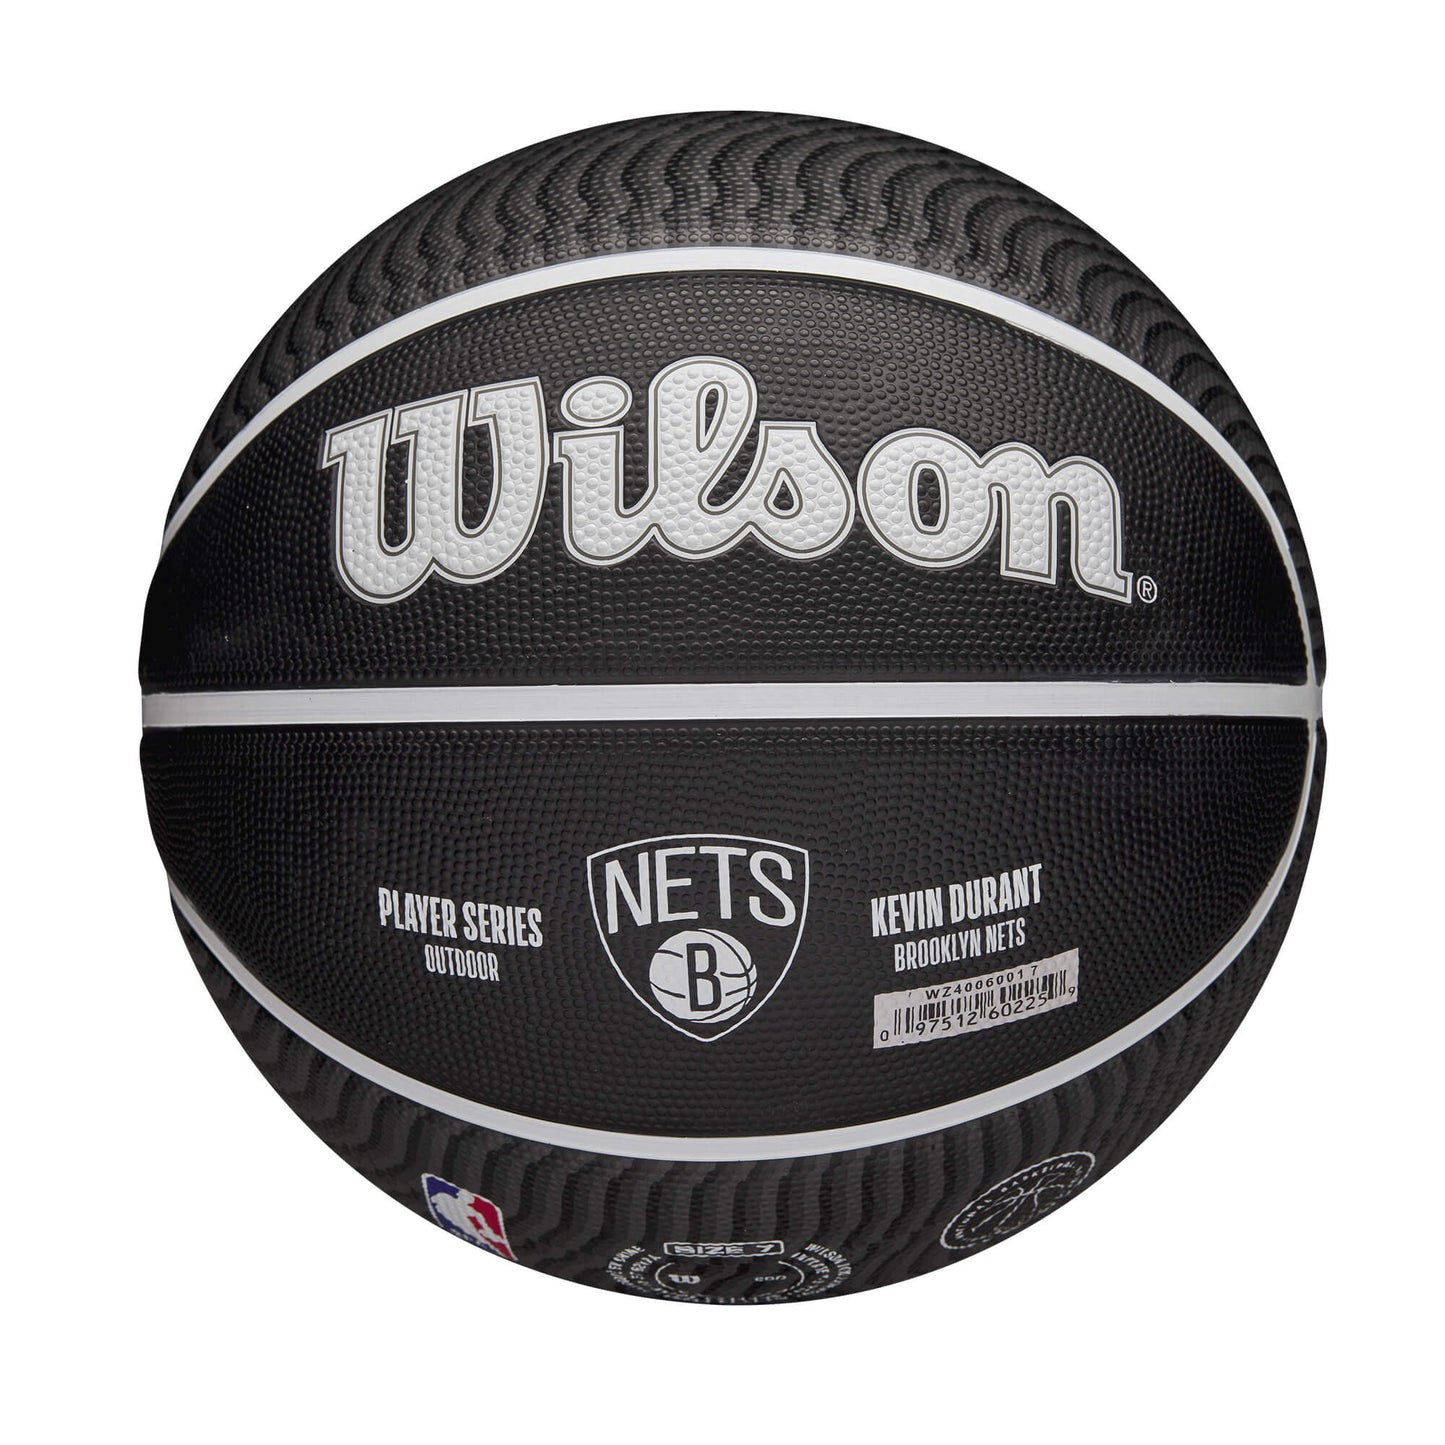 WILSON NBA PLAYER ICON - OUTDOOR - DURANT Black (sz. 7)